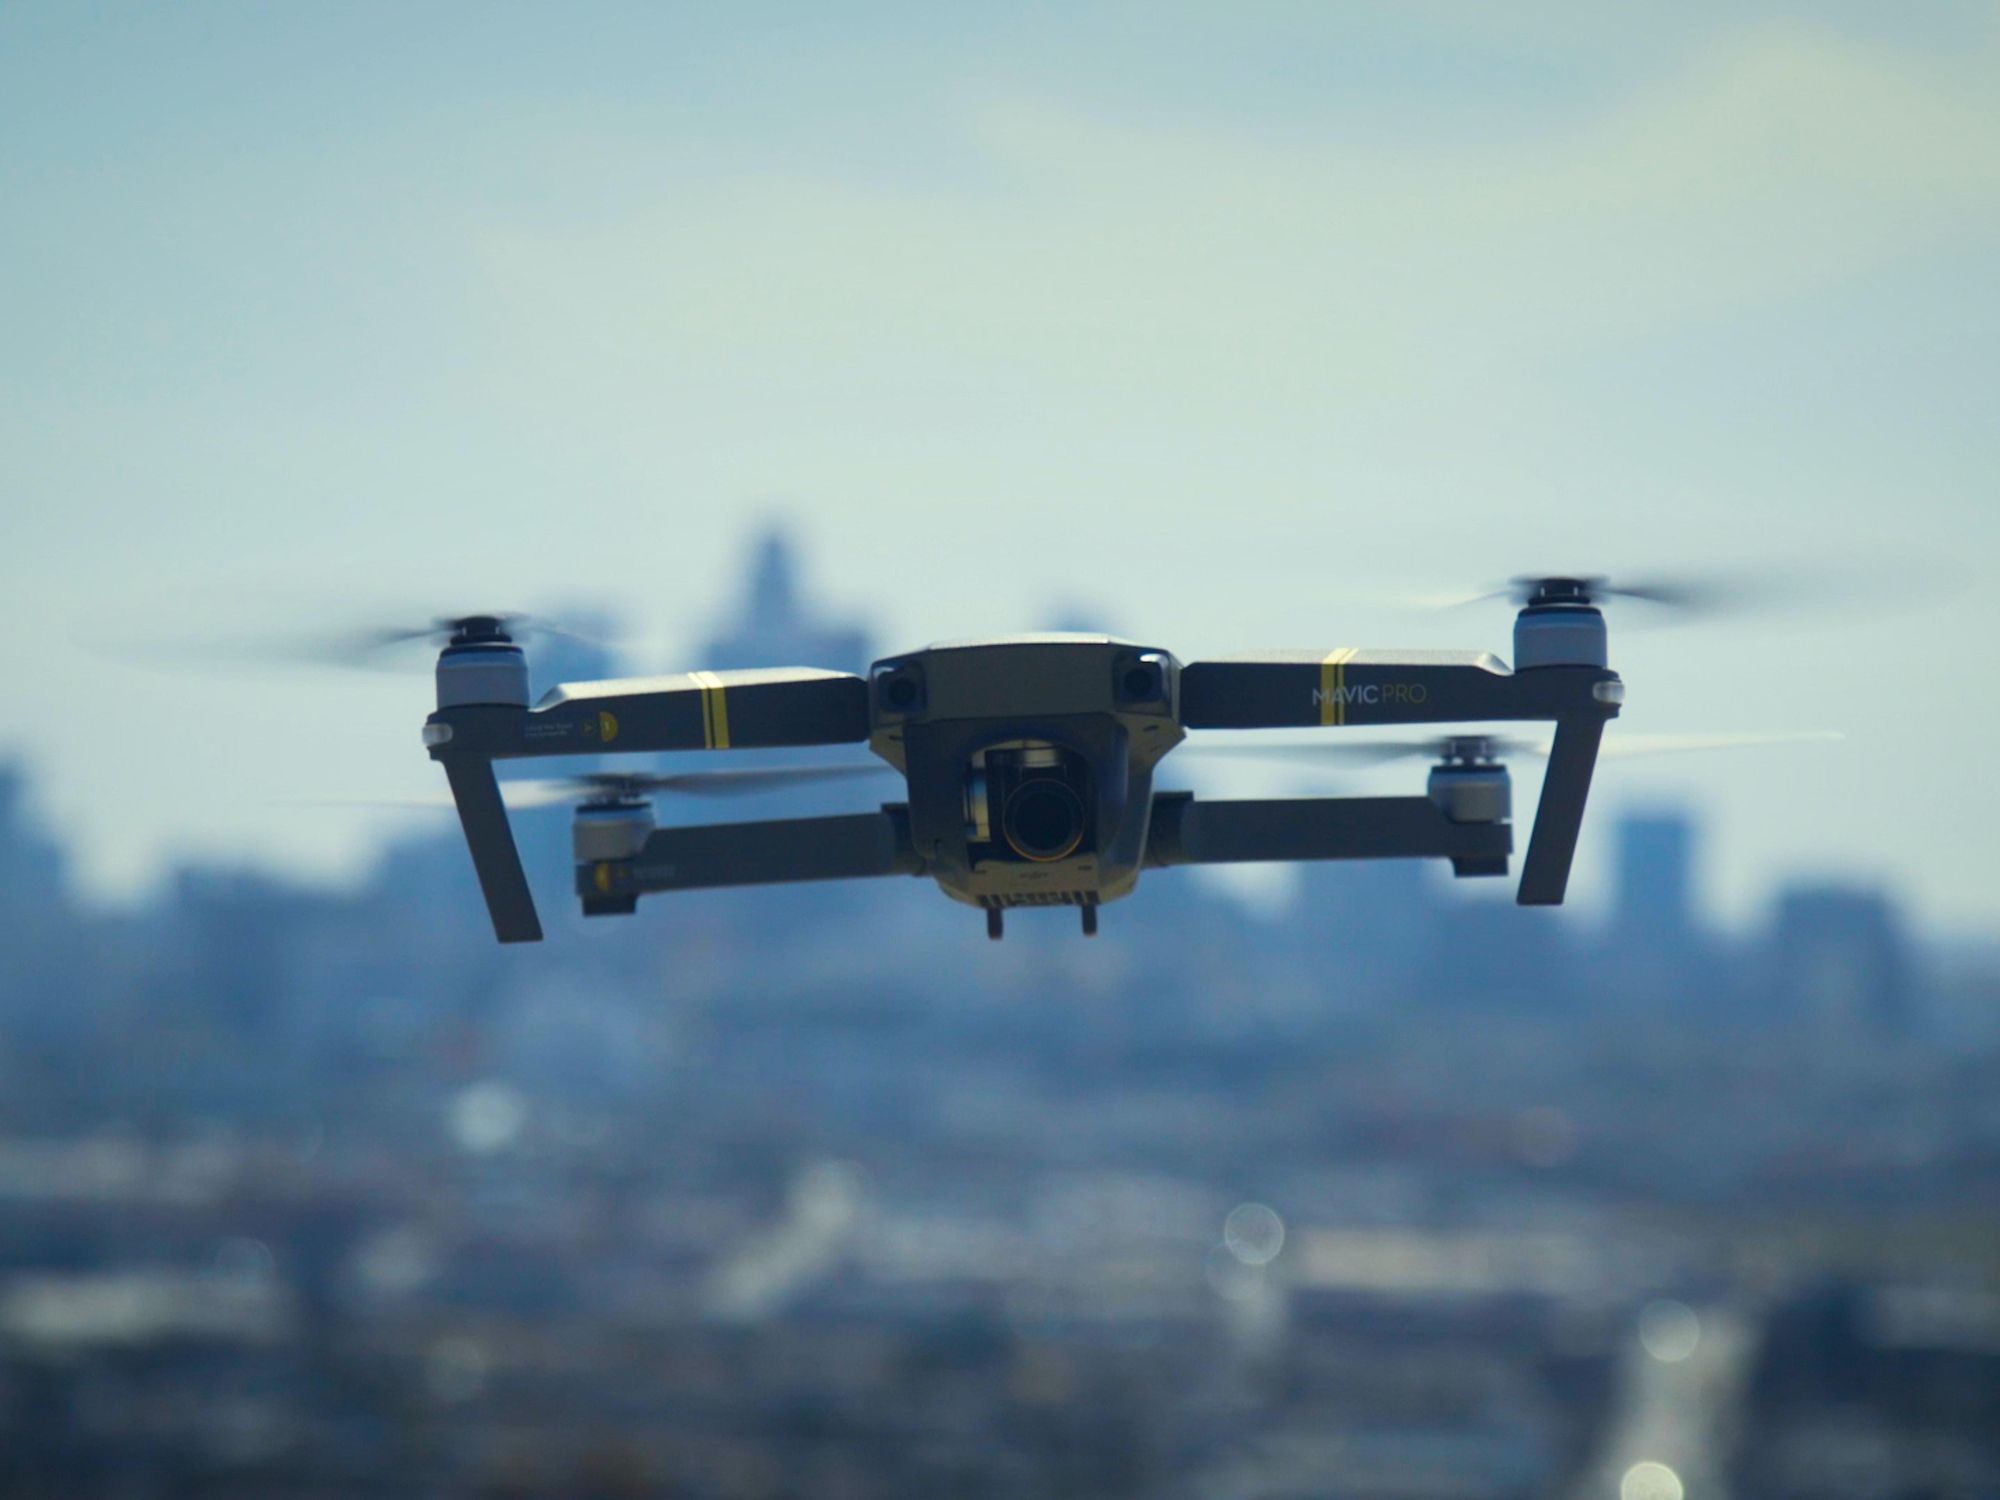 Delivery via Drone? LA Mayor Wants to Make it Happen by 2023